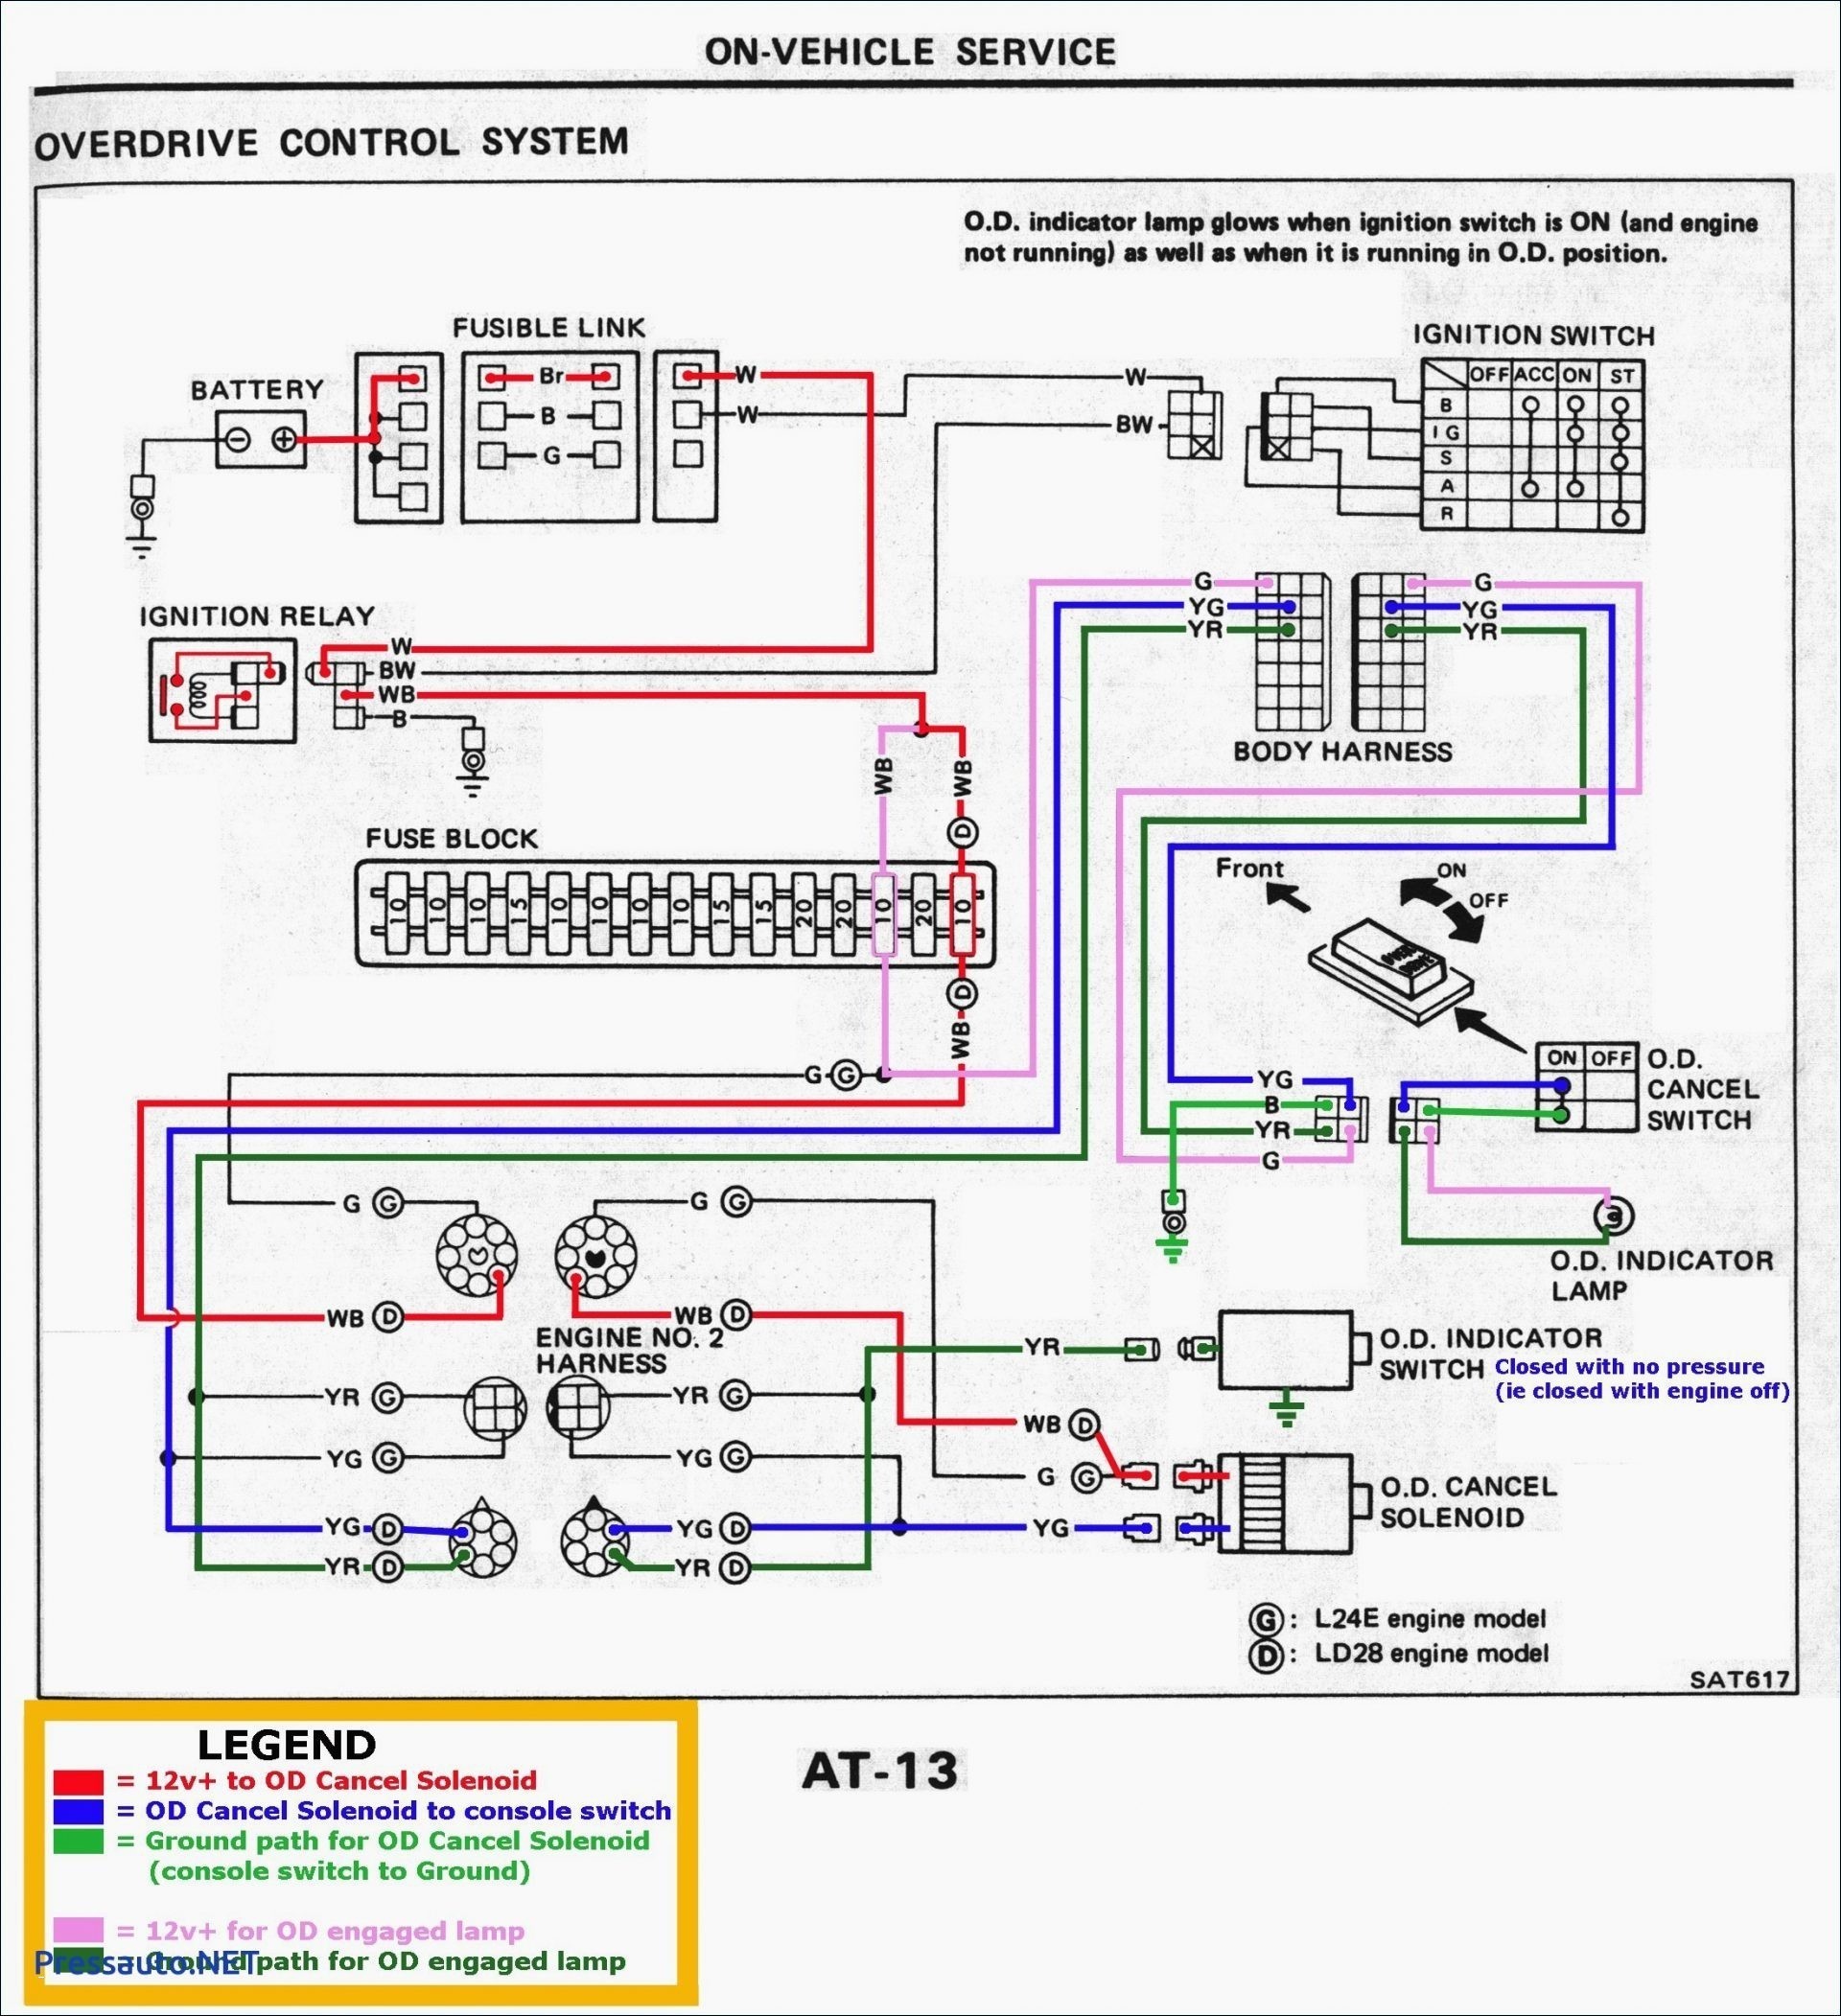 Electric Circuit Diagram New Housing Electrical Wiring Diagram Unique Lamp Circuit Diagram Wiring